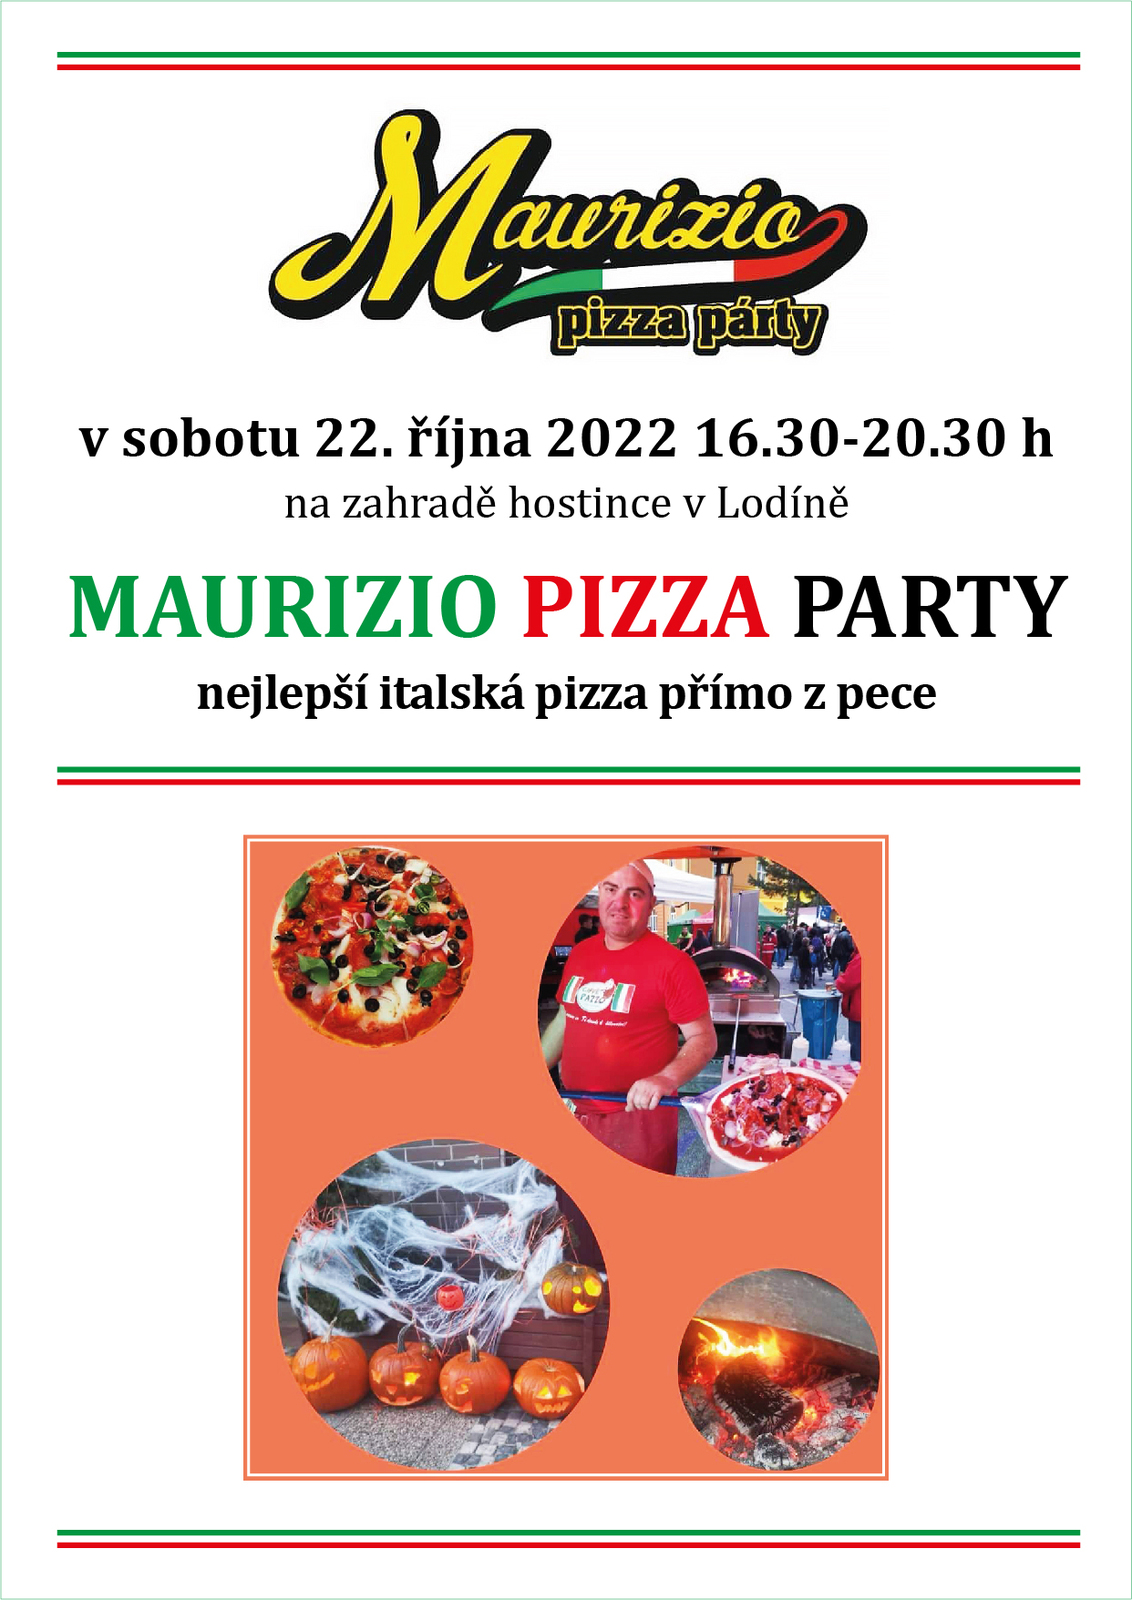 Maurizio pizza party.jpg